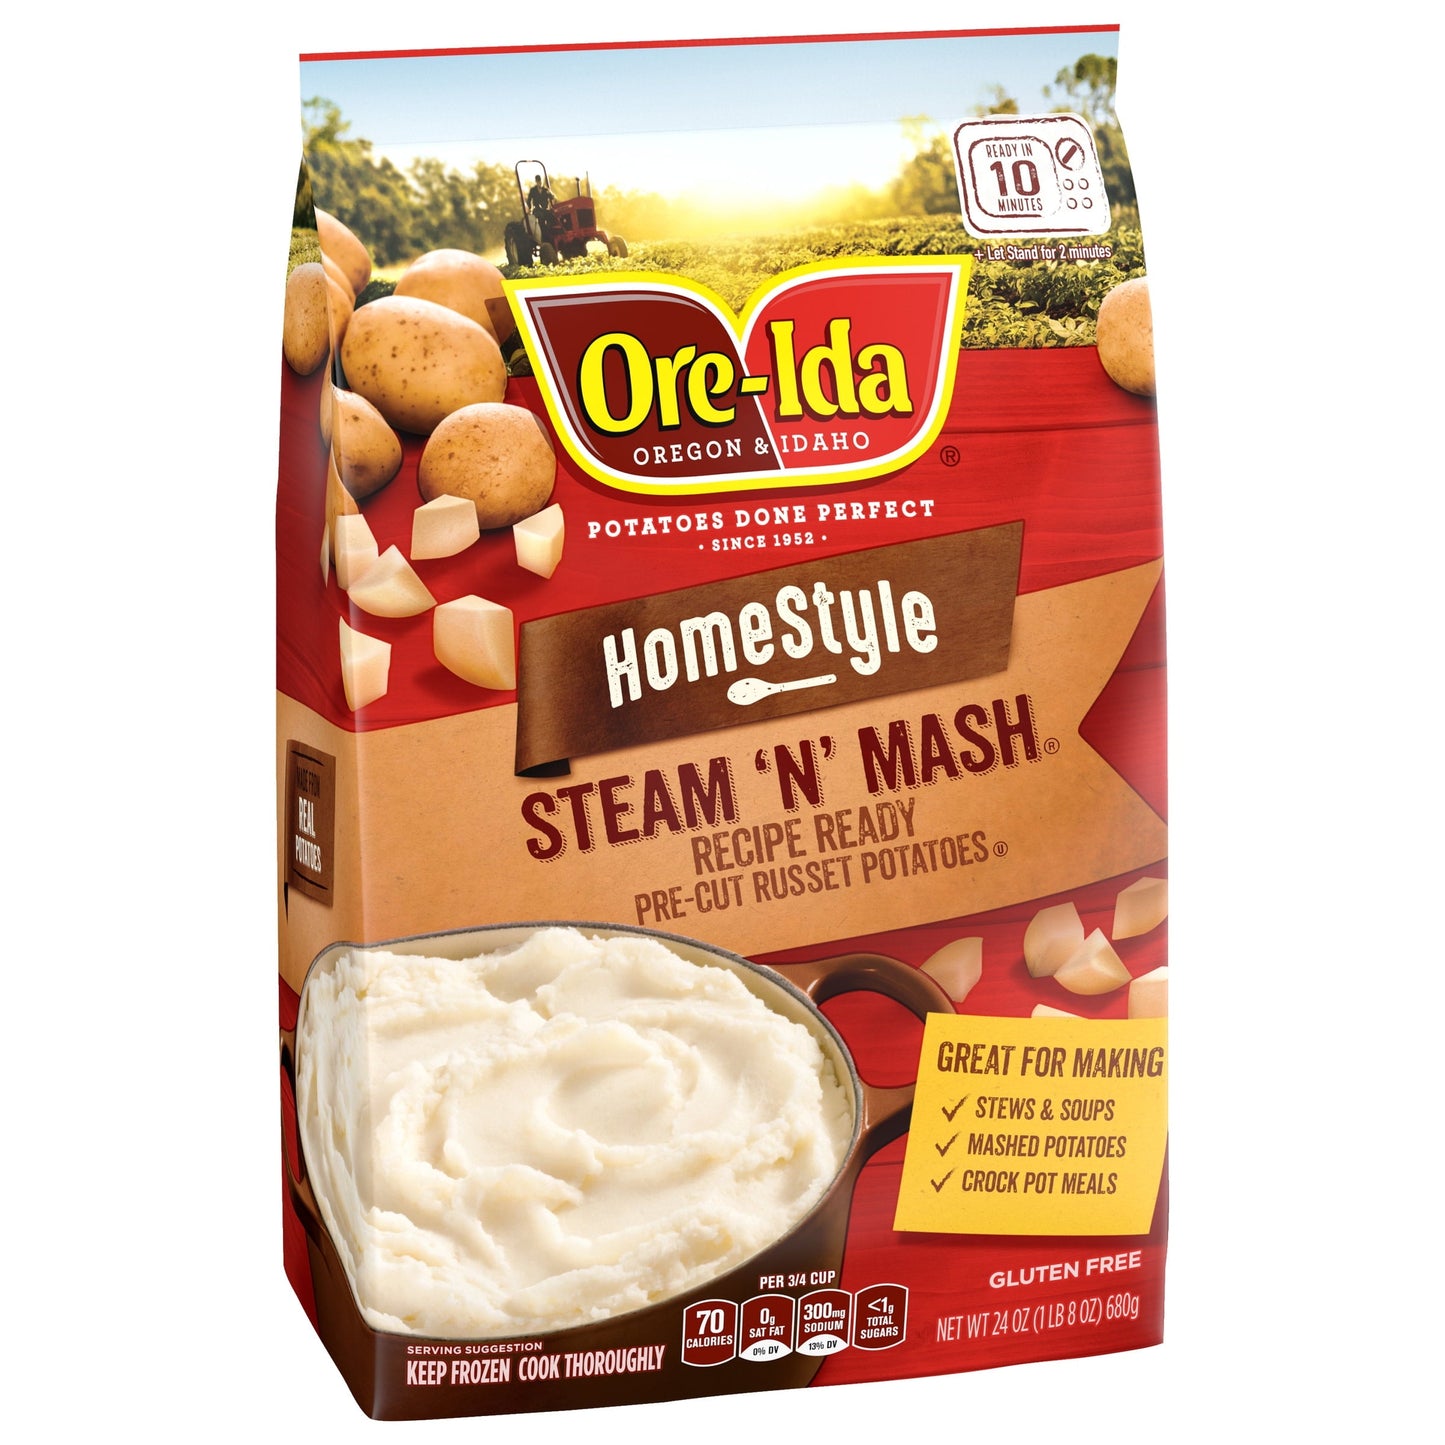 Ore-Ida Home Style Steam 'N' Mash Recipe Ready Pre-Cut Russet Potatoes Frozen Side Dish, 24 oz Bag